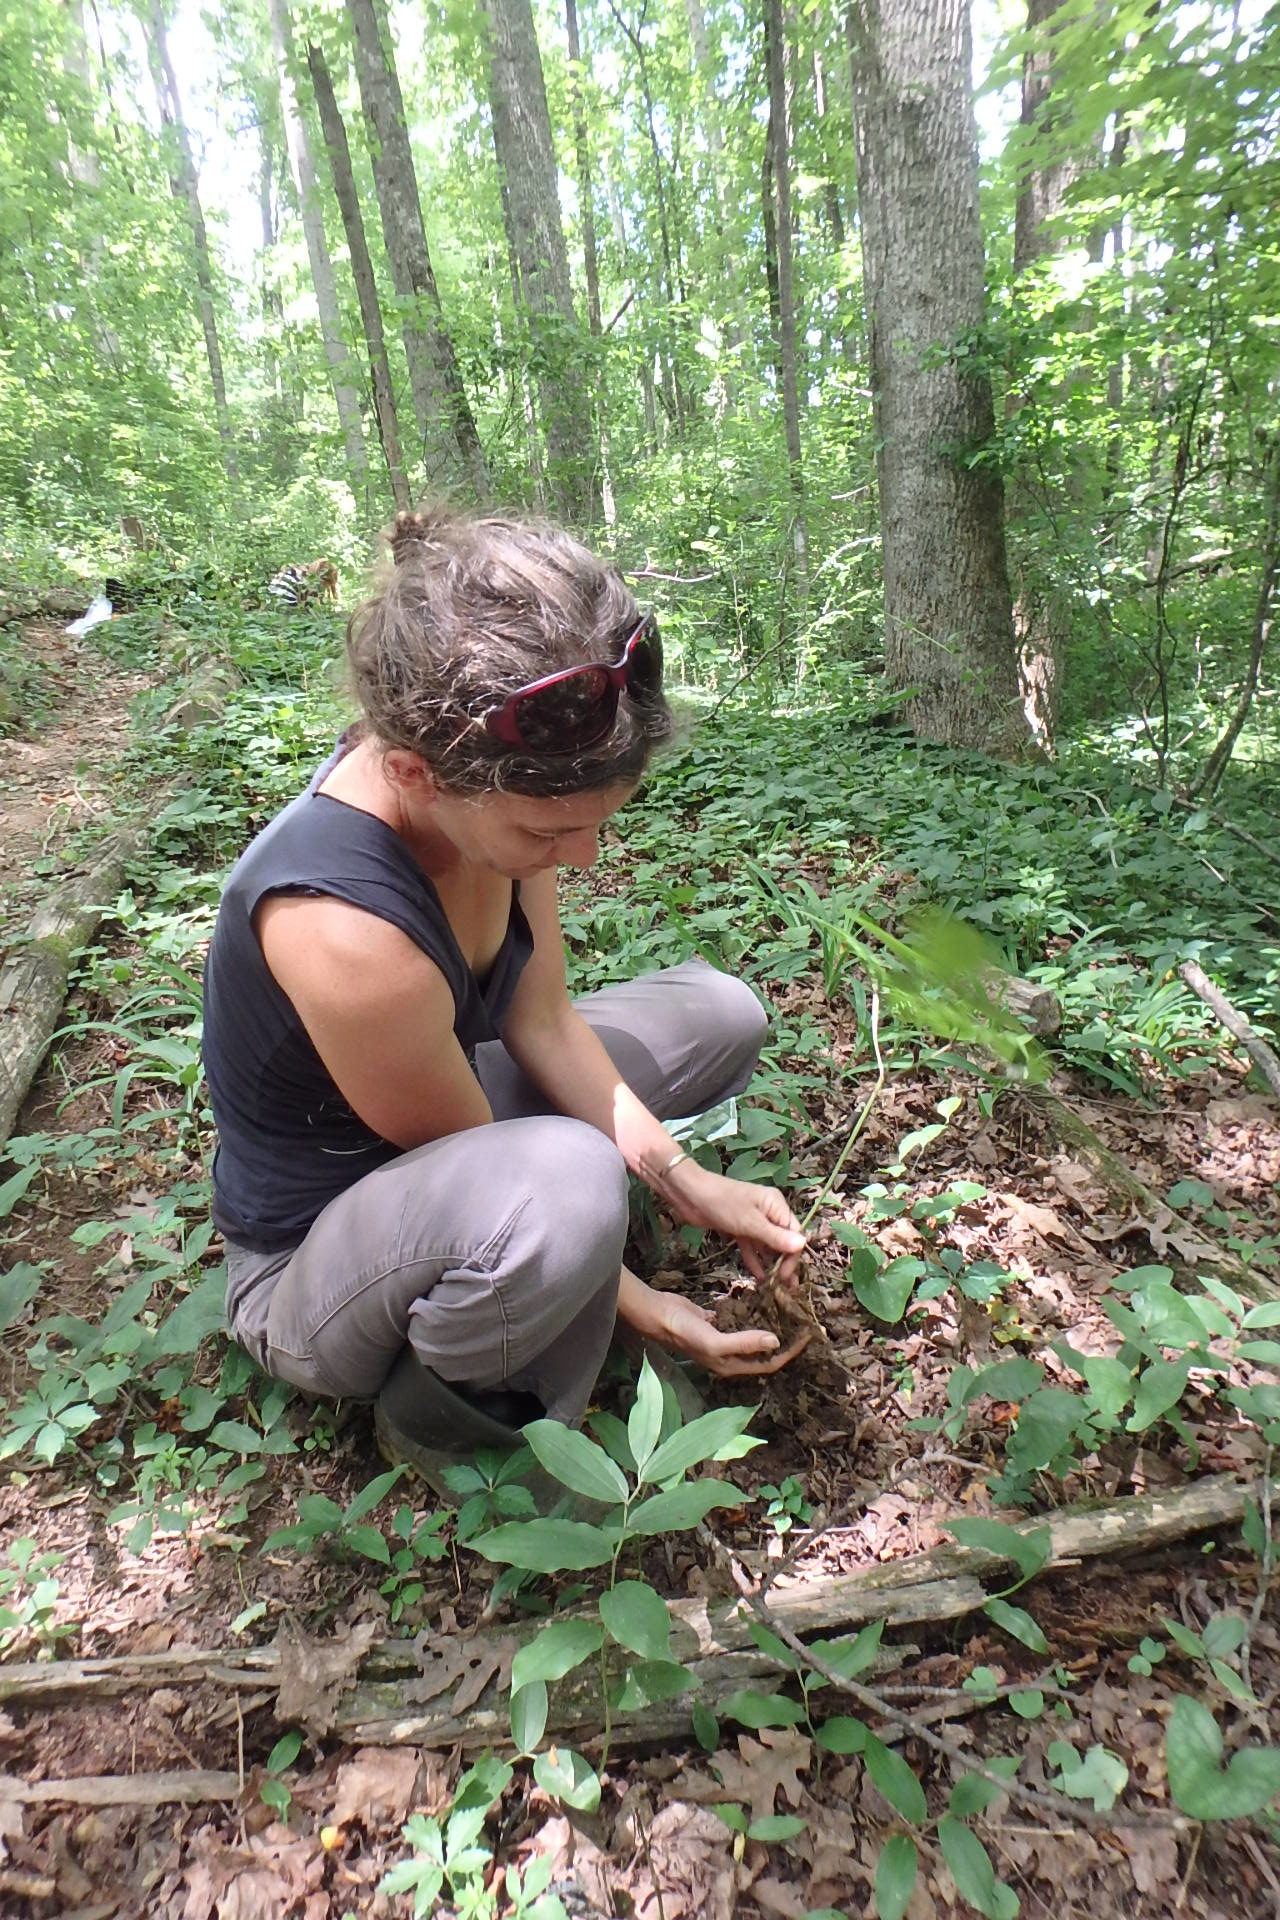 Examining woodland plants